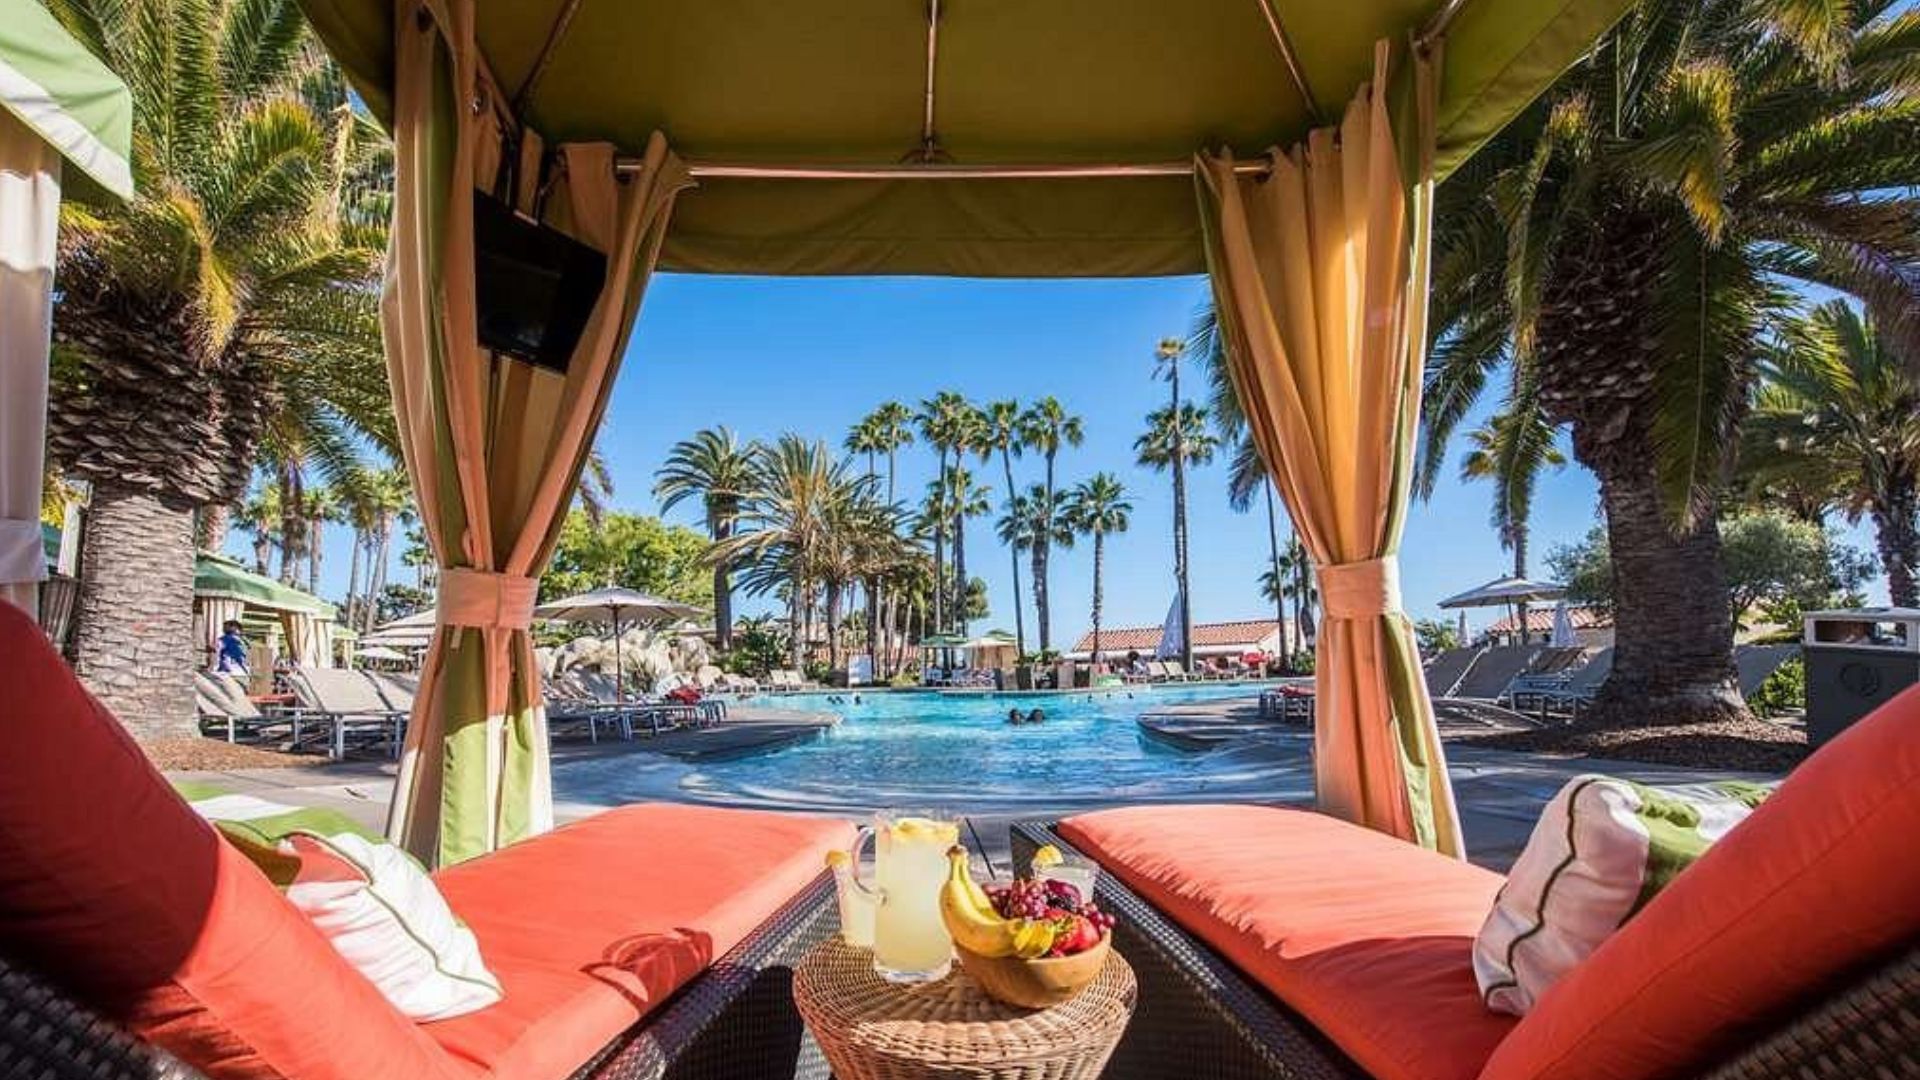 cabana with two orange lounge chairs facing pool